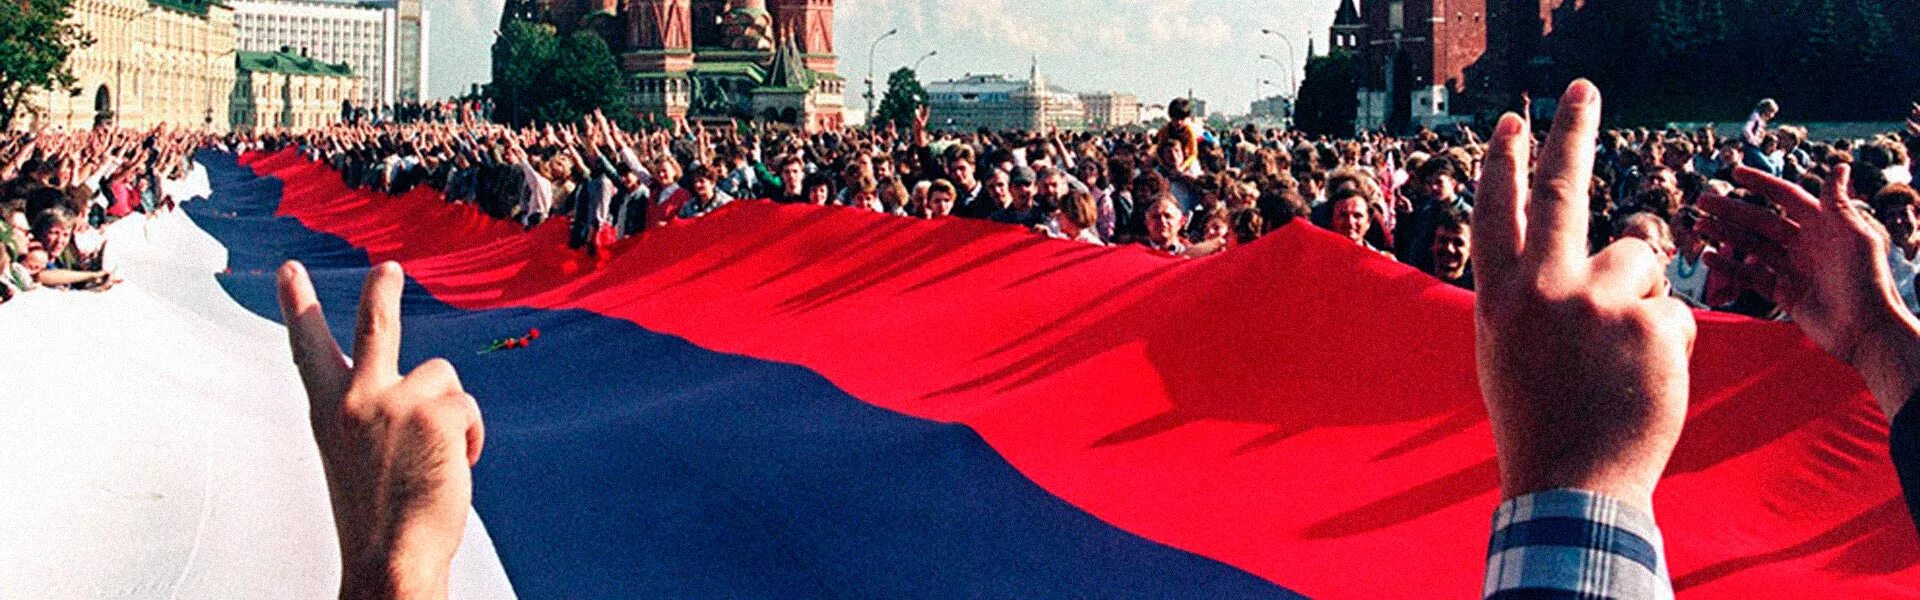 Августовский путч 22 августа. Флаг России август 1991. Флаг России 1991 Ельцин. Августовский путч 1991 флаг России. 20 августа рф